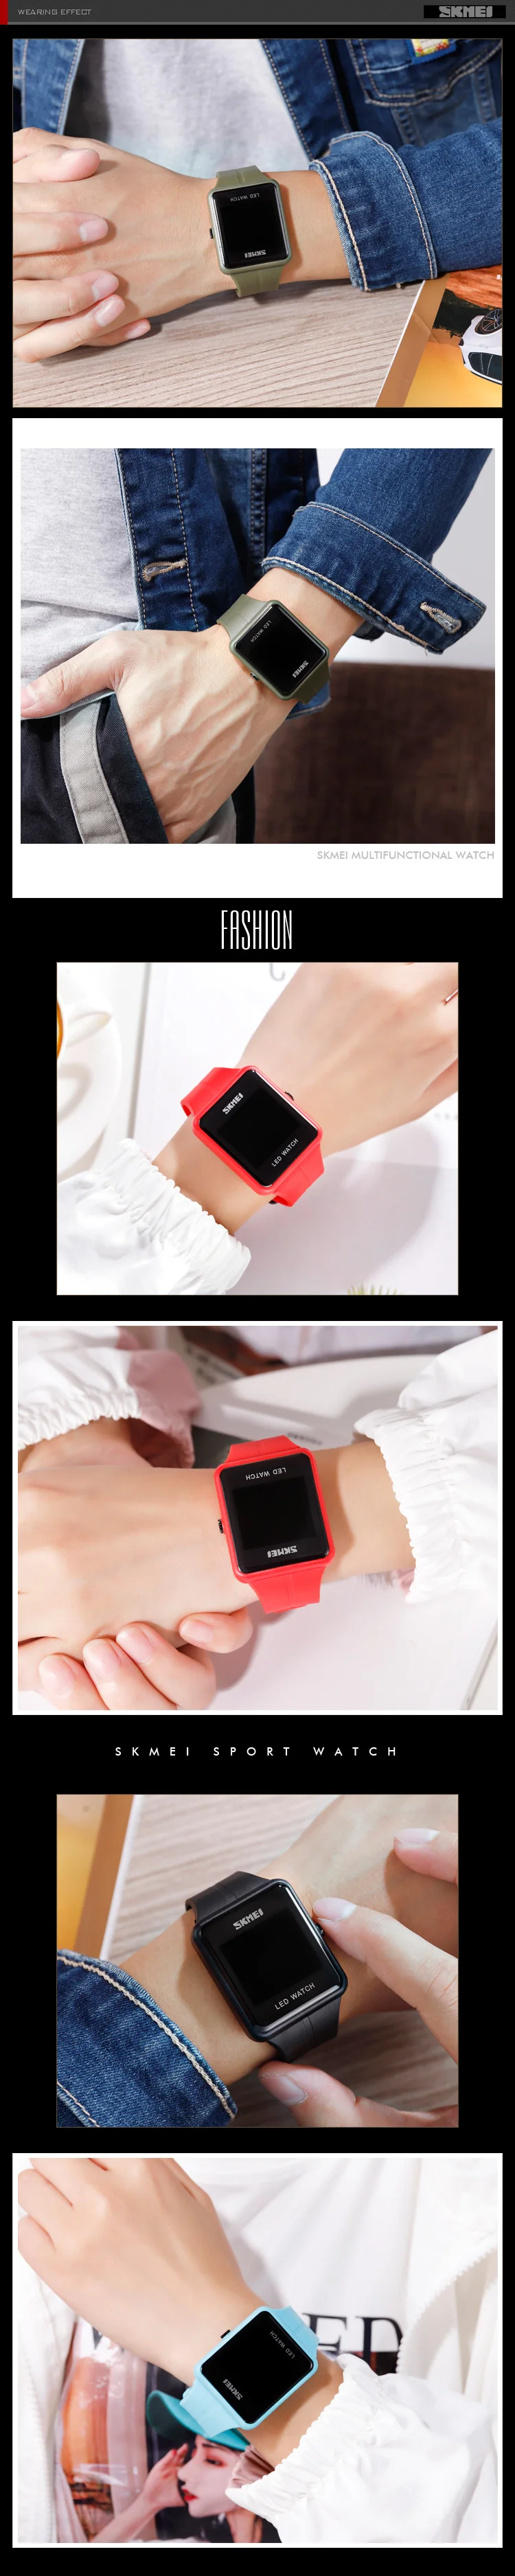 The Men's Watches Brand SKMEI Watch Digital Women's Watch Date Display LED Light Electronic Wristwatch Waterproof Clock Reloj